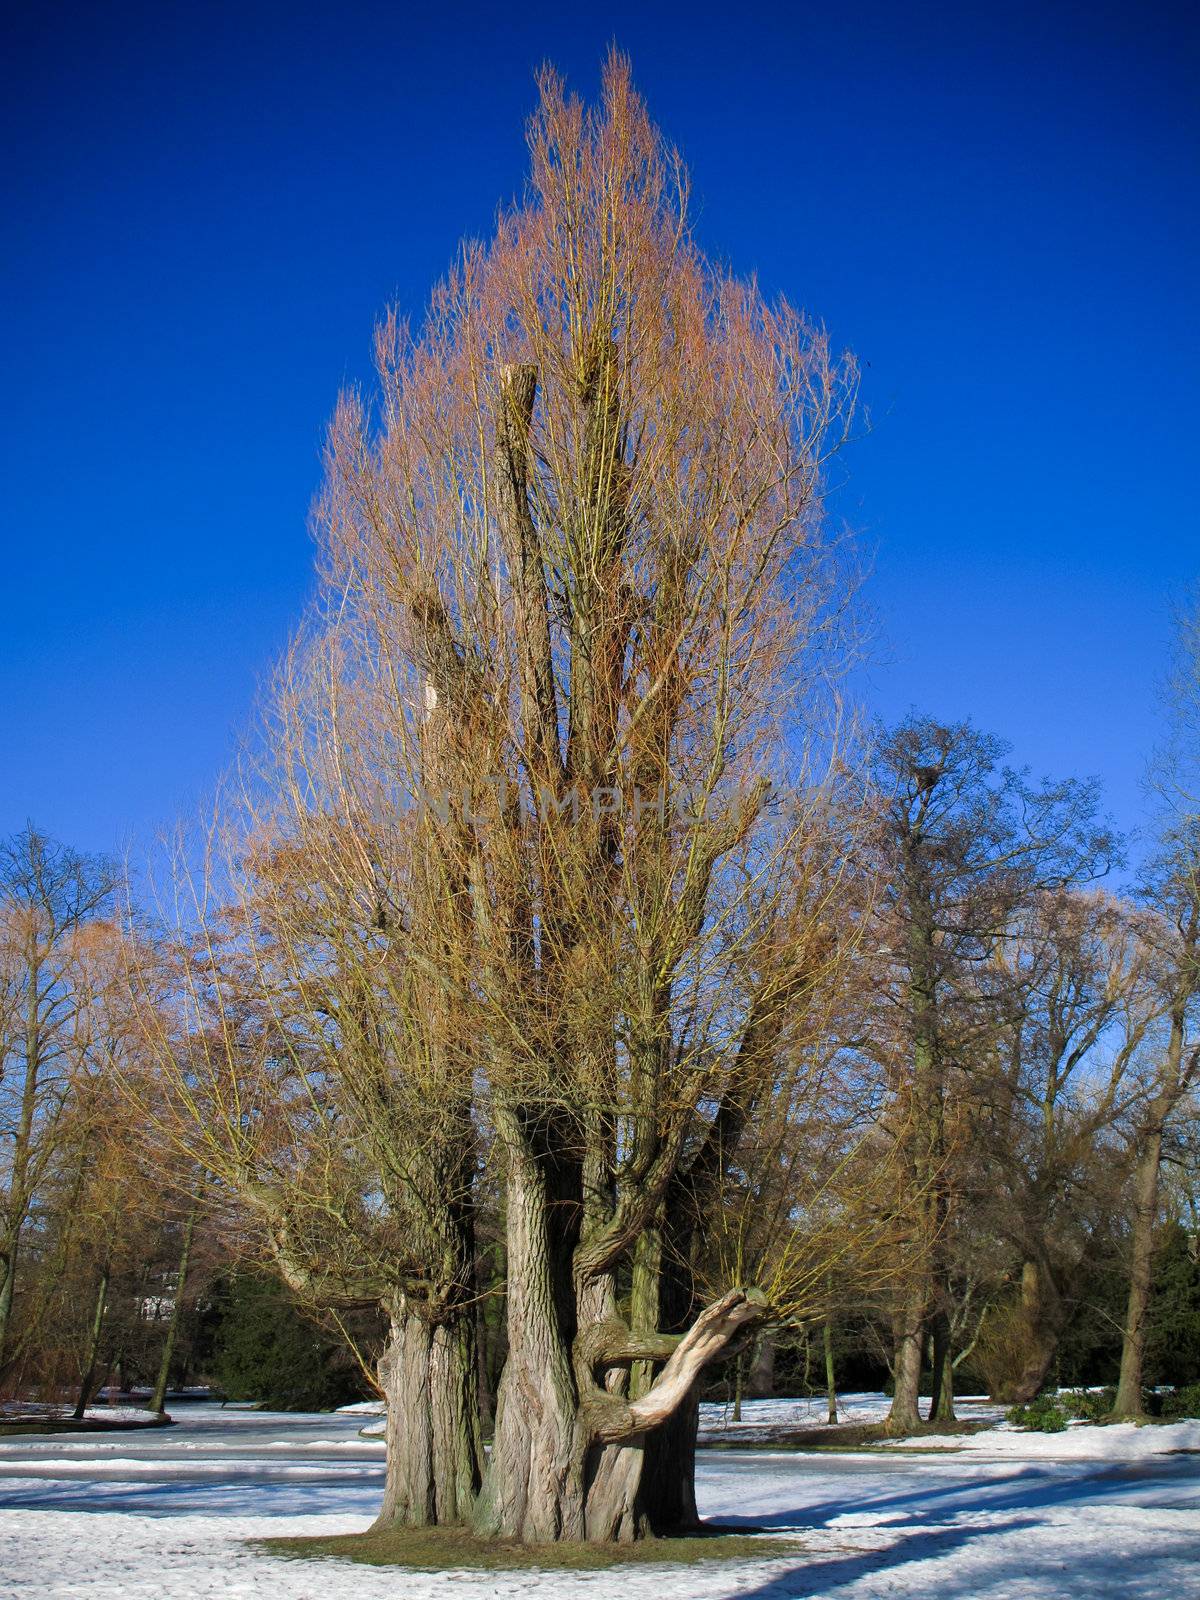 salix tree, willow, sallow, osier in a park in frederiksberg, denmark in sun light in winter